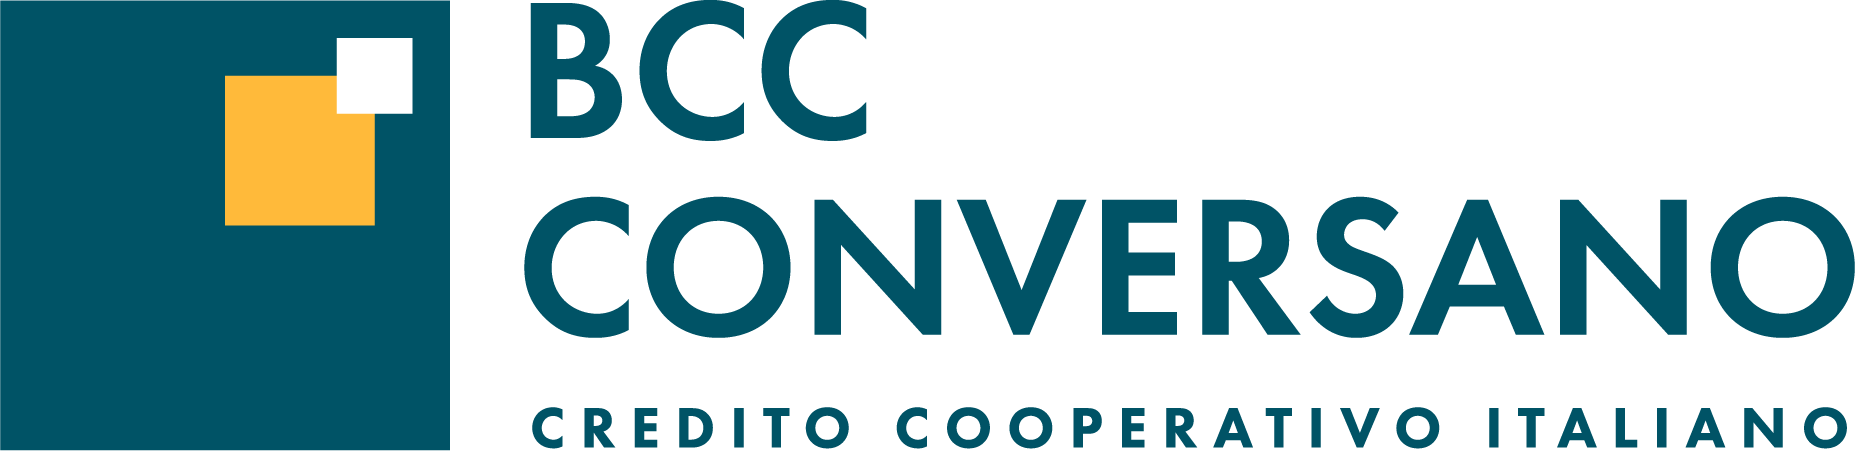 BCC CONVERSANO LECTORINFABULA